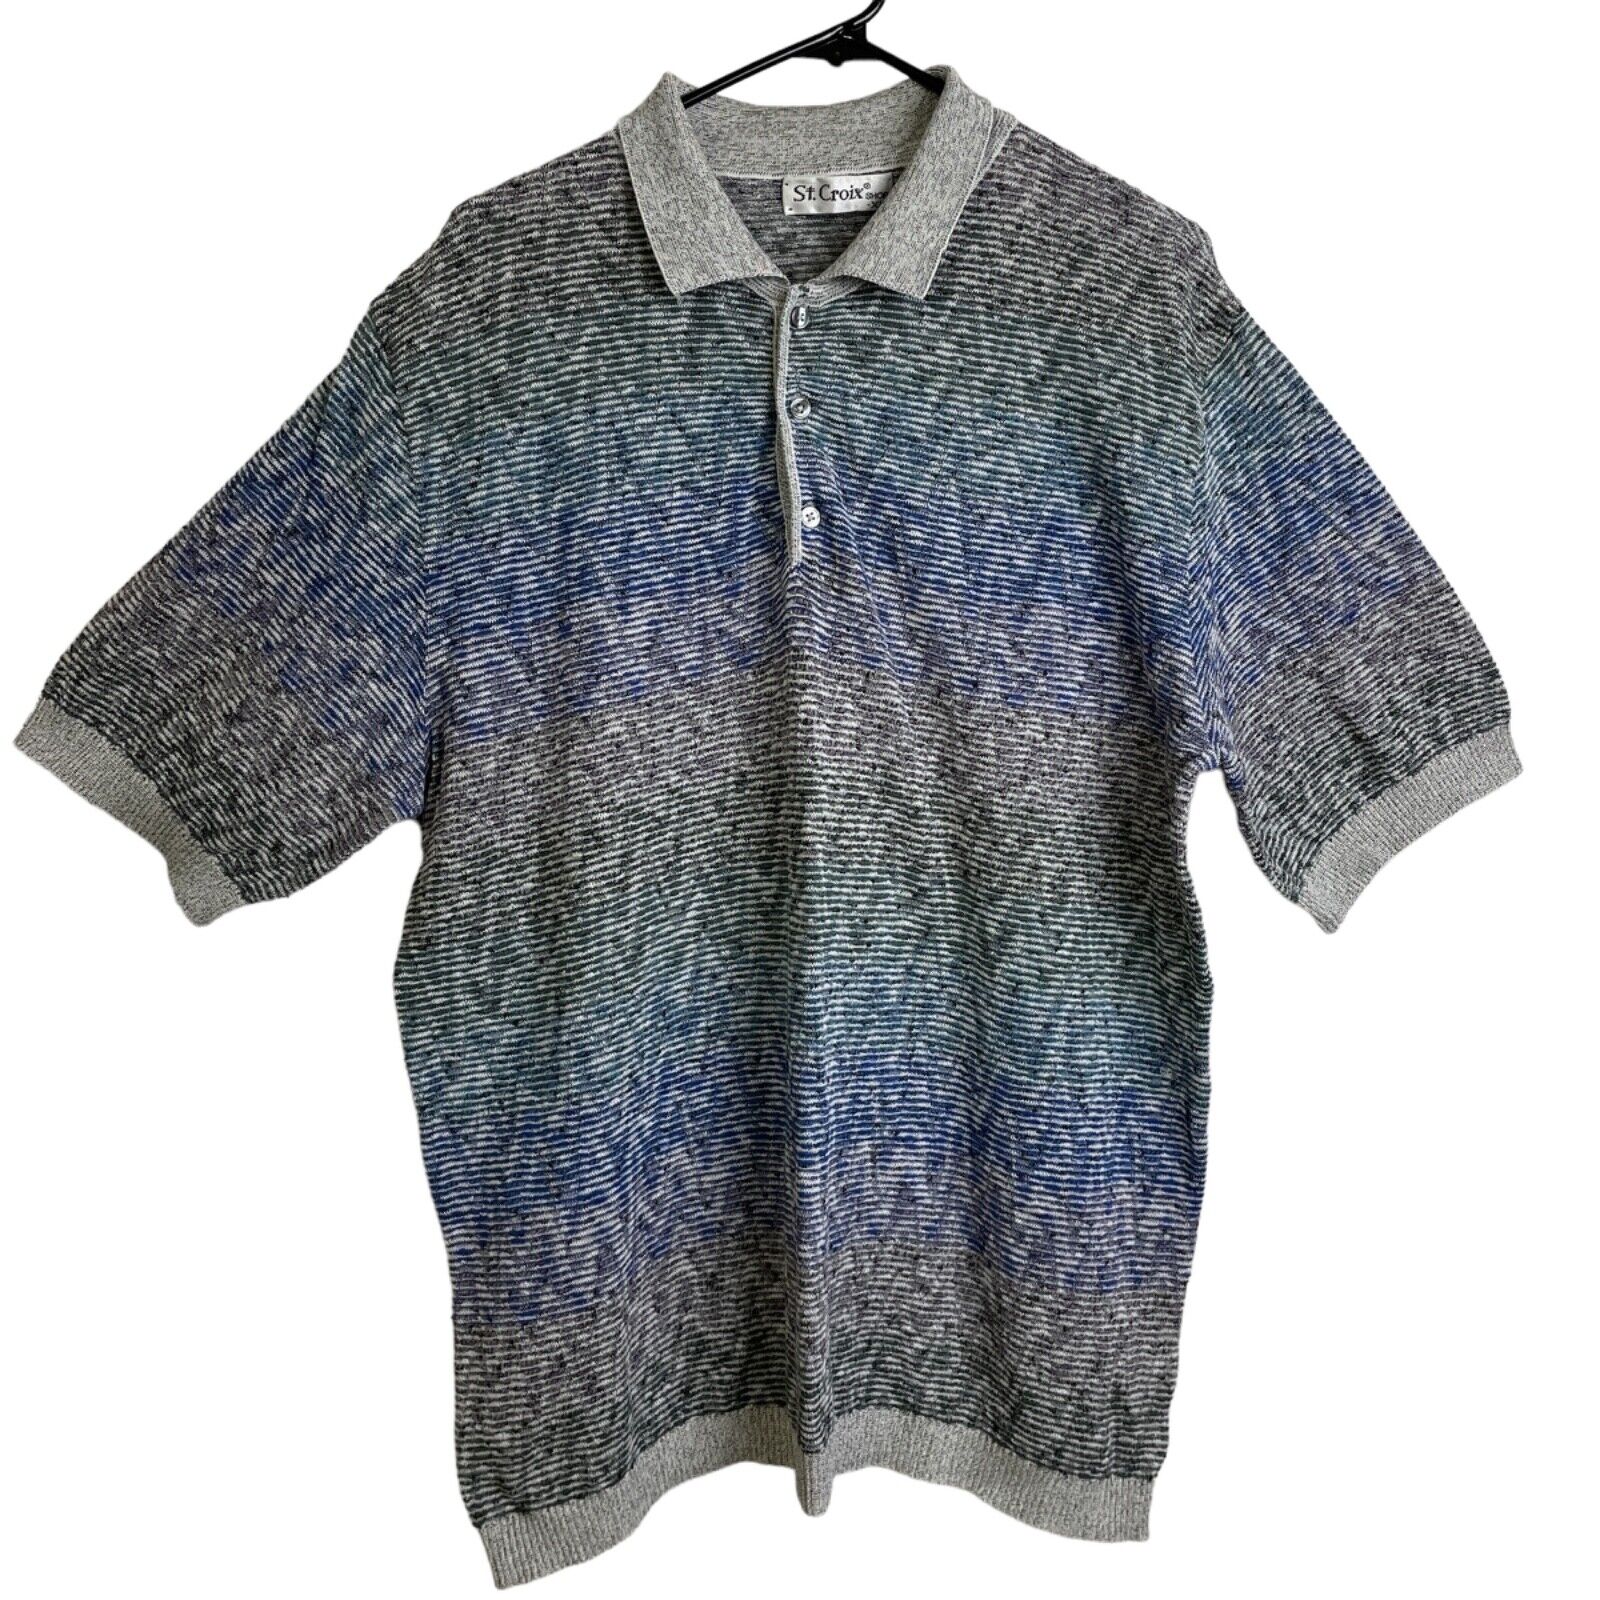 Vintage St Croix Shop Sweater Mens XL Short Sleeve Knit Gray Blue Buttons Rib